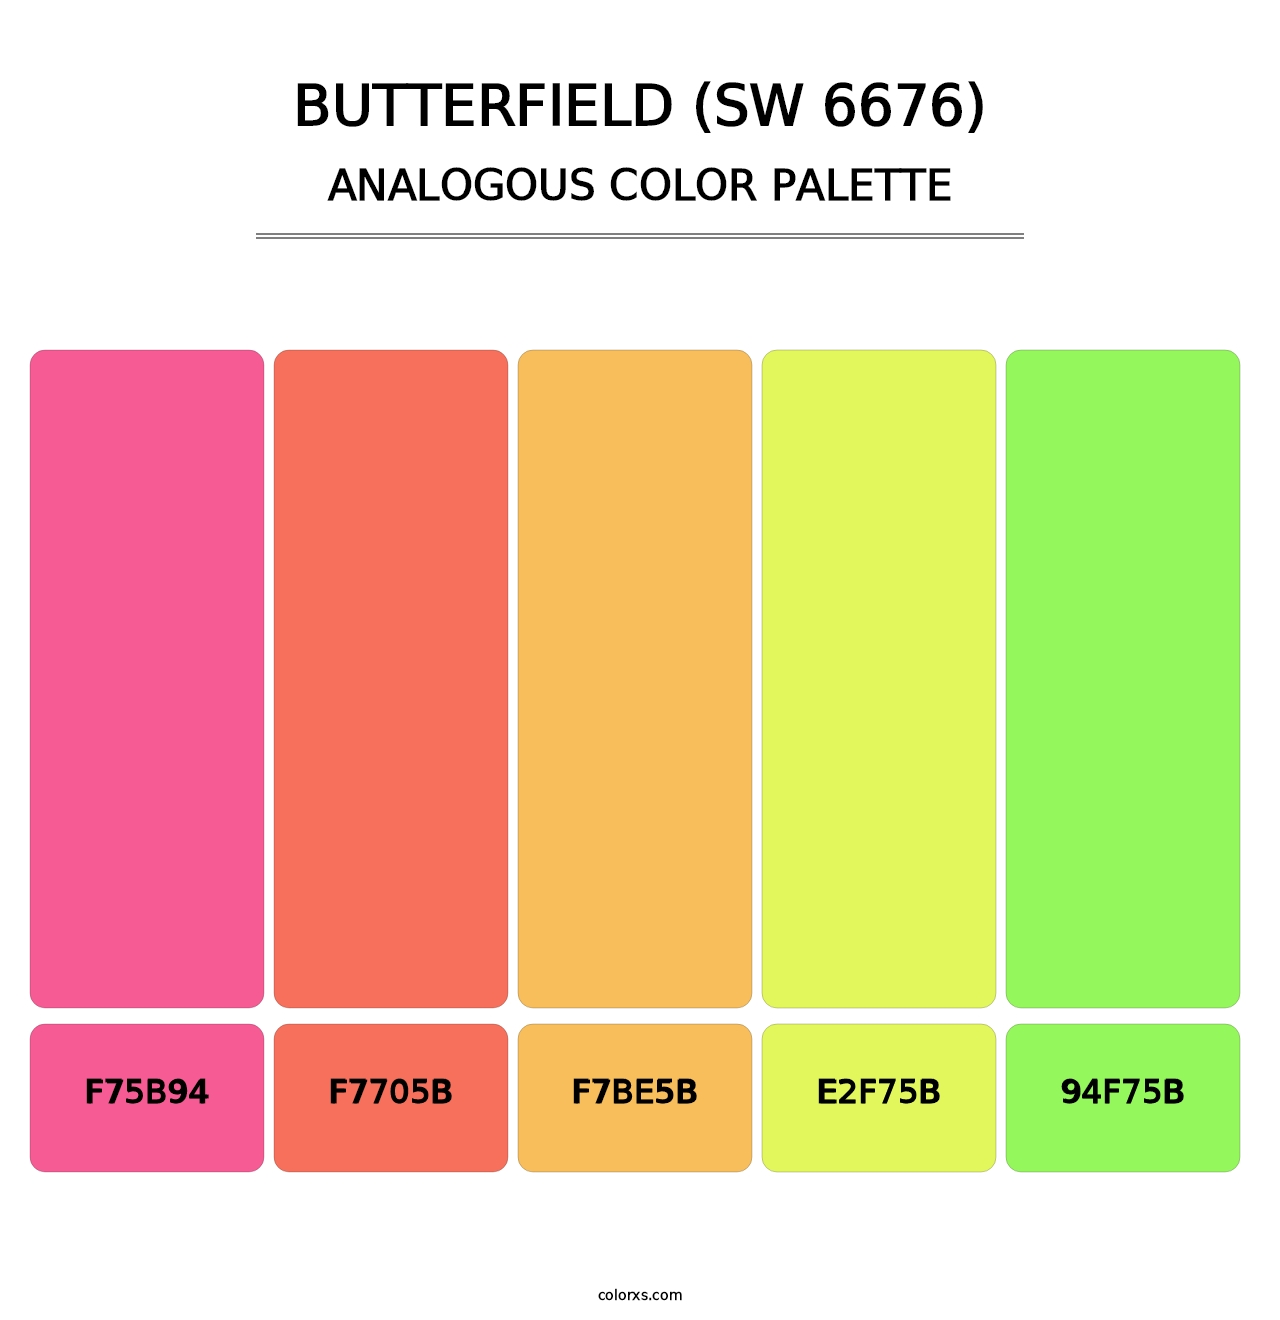 Butterfield (SW 6676) - Analogous Color Palette